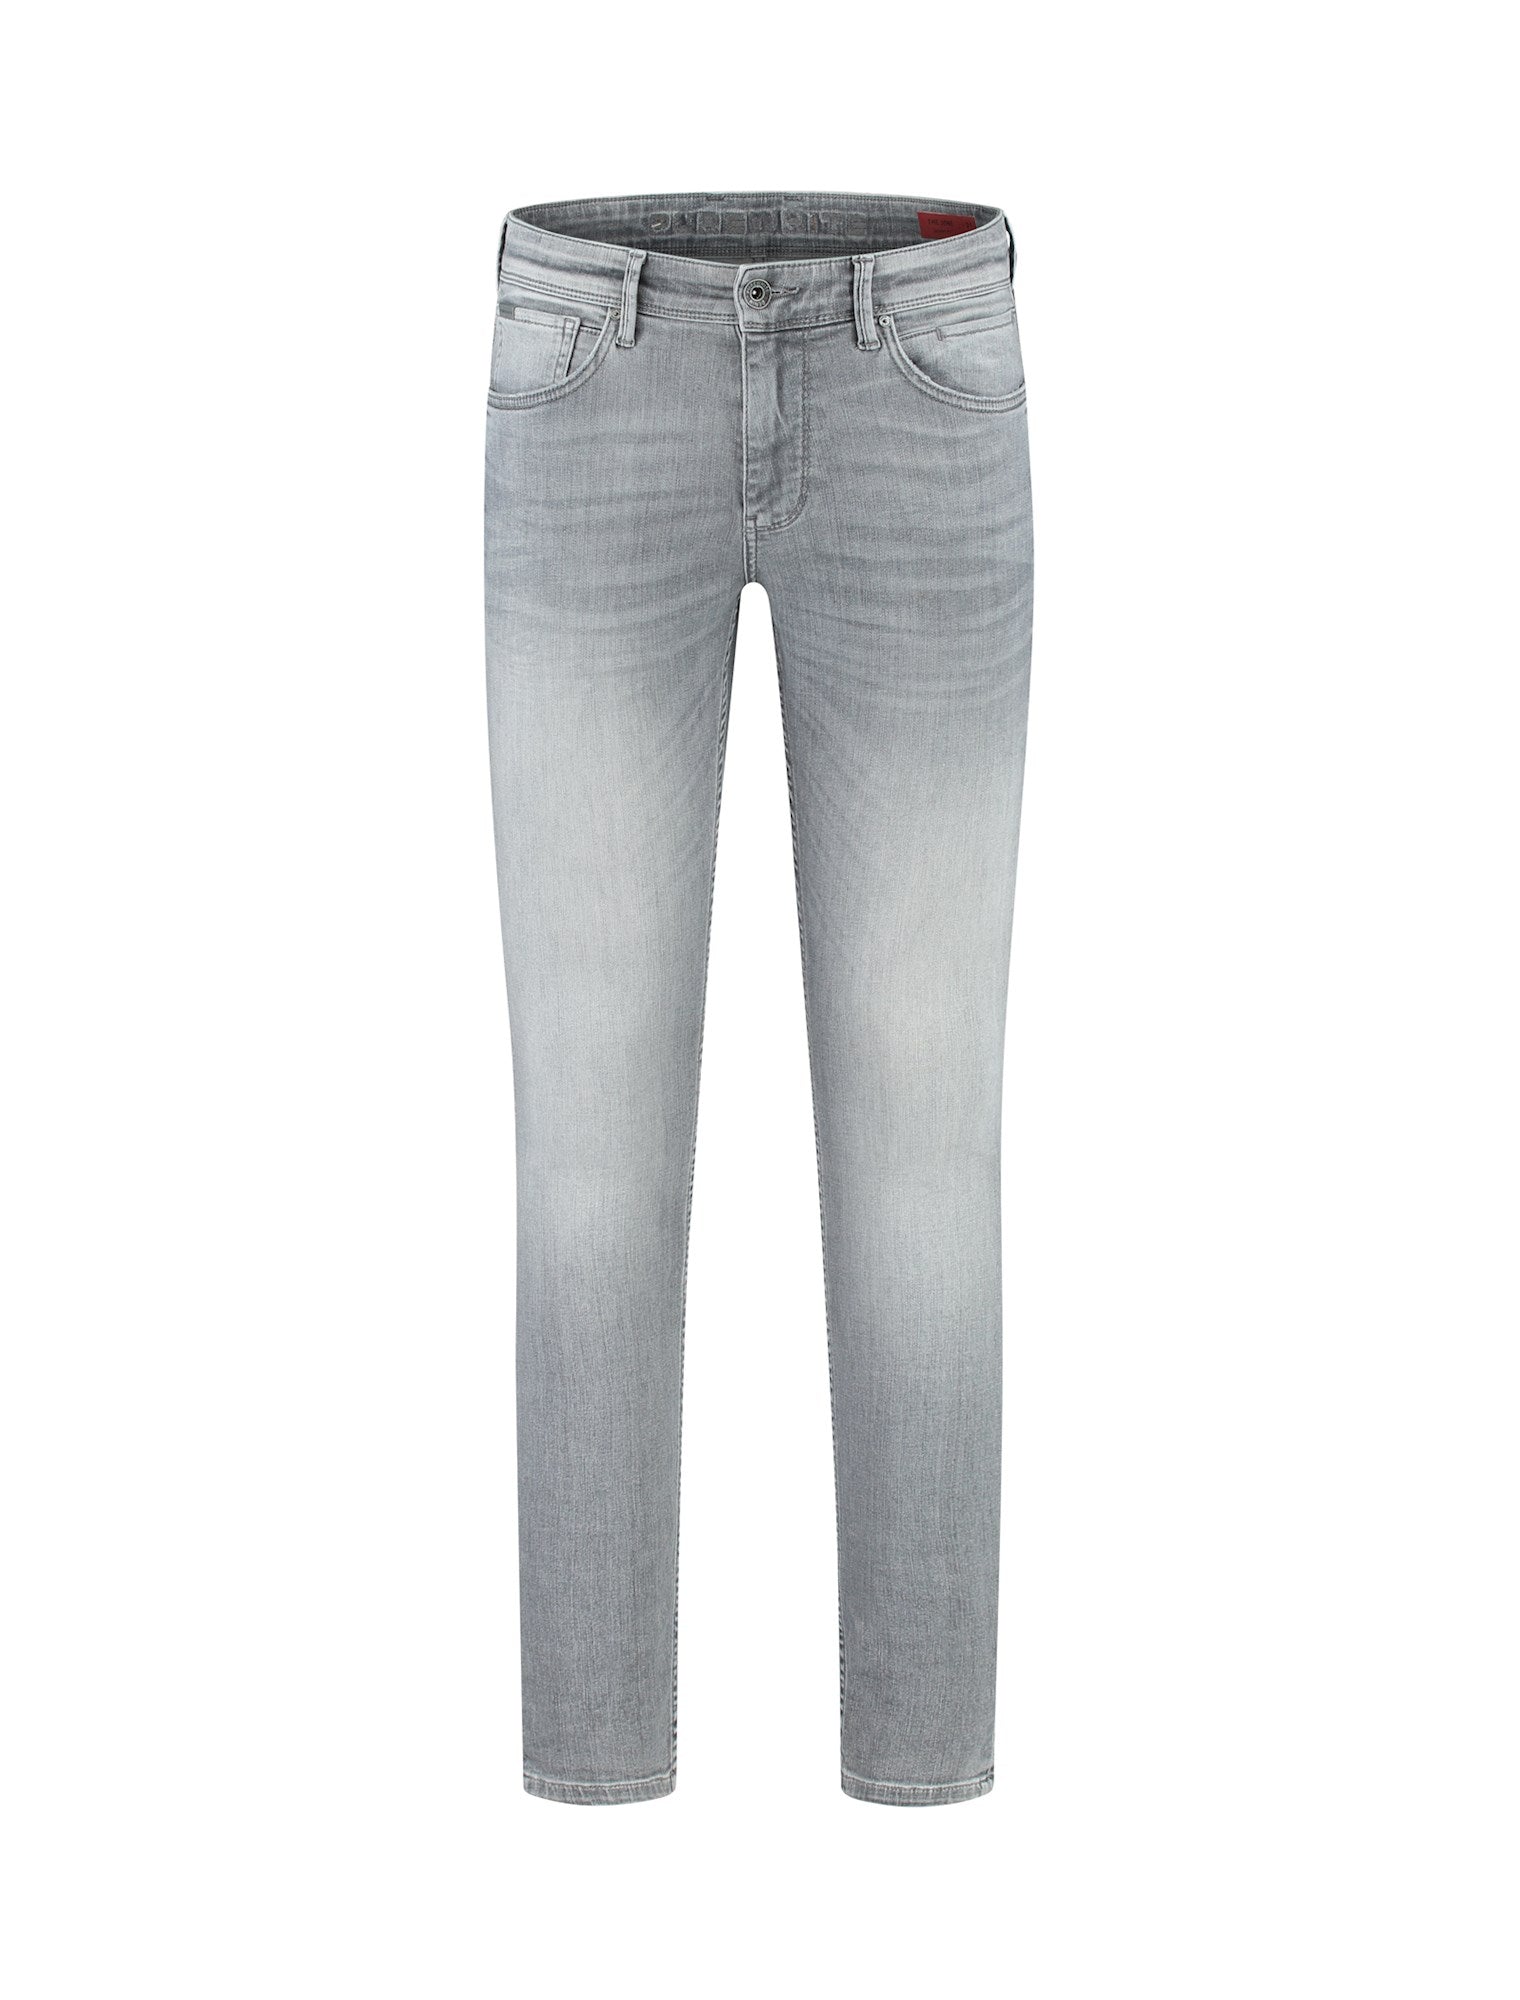 Purewhite Jeans The Jone W0112